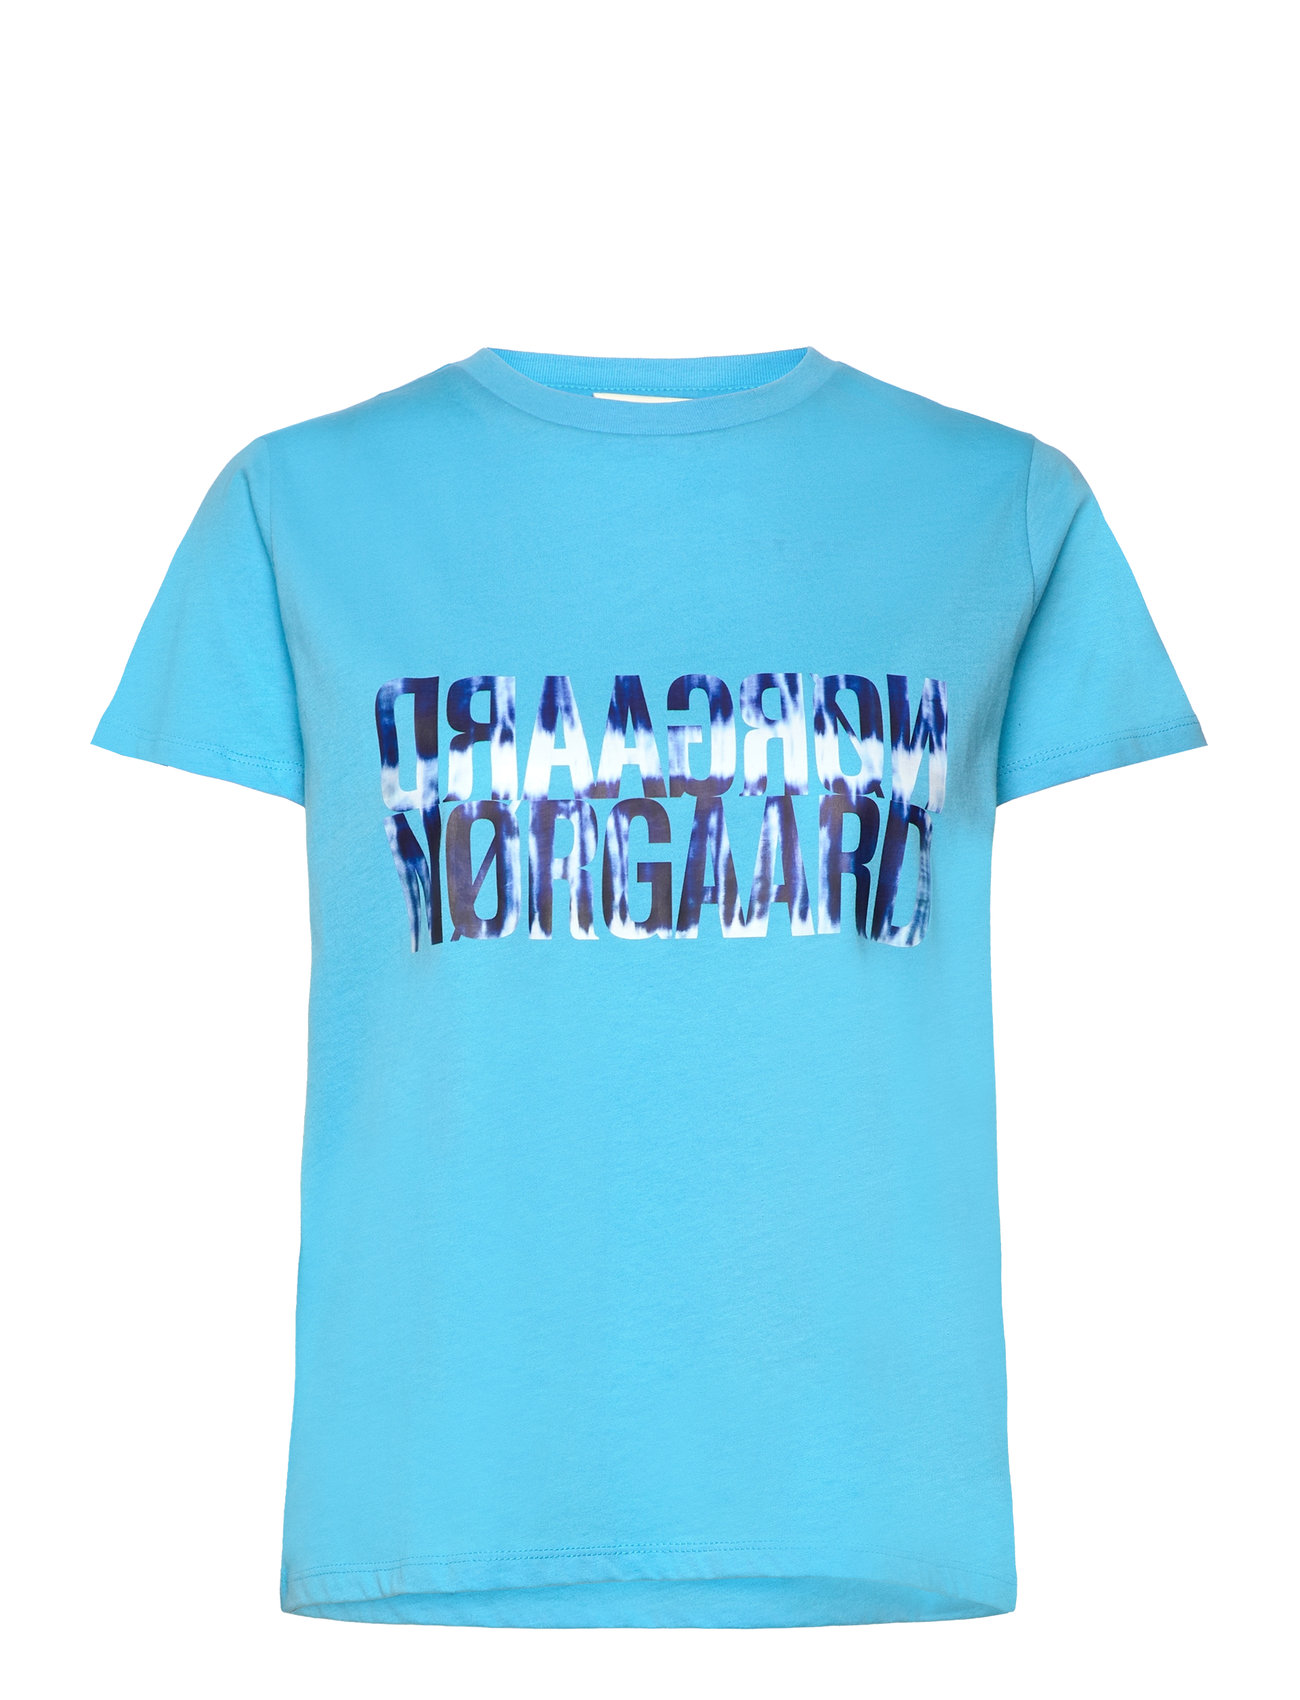 Single Organic Trenda P Tee Tops T-shirts & Tops Short-sleeved Blue Mads Nørgaard